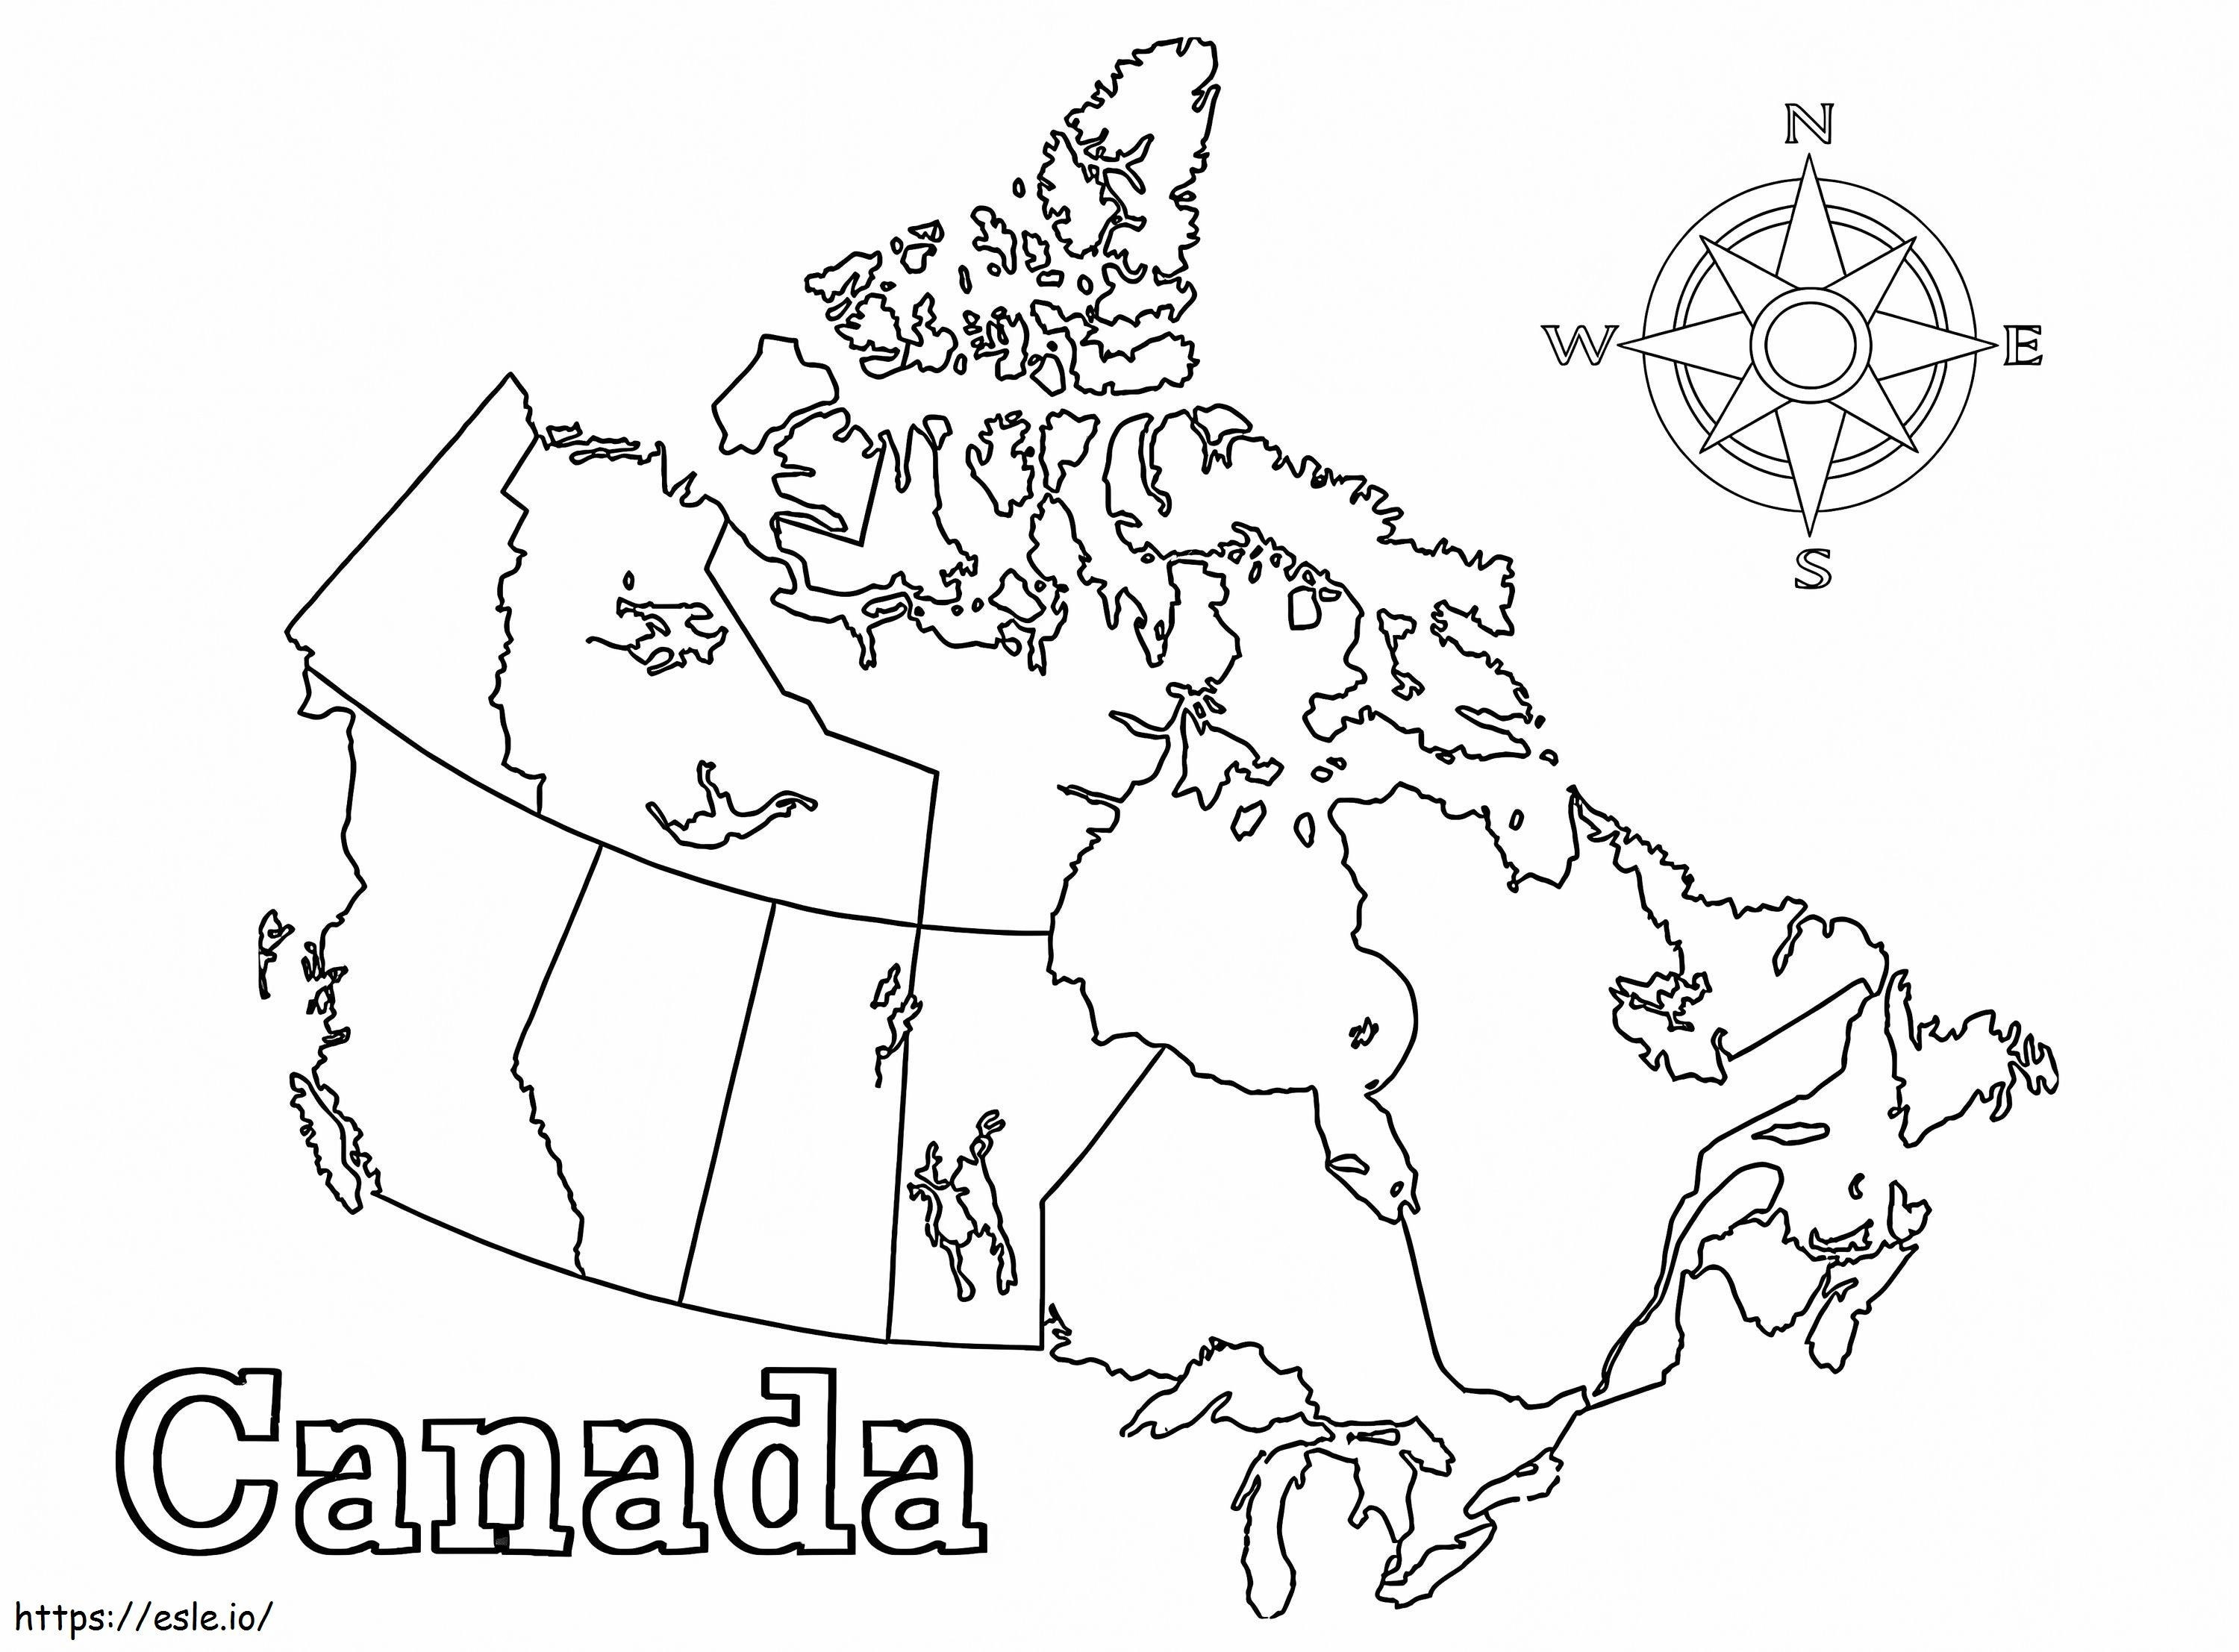 Kanada-Karte zum Ausmalen ausmalbilder